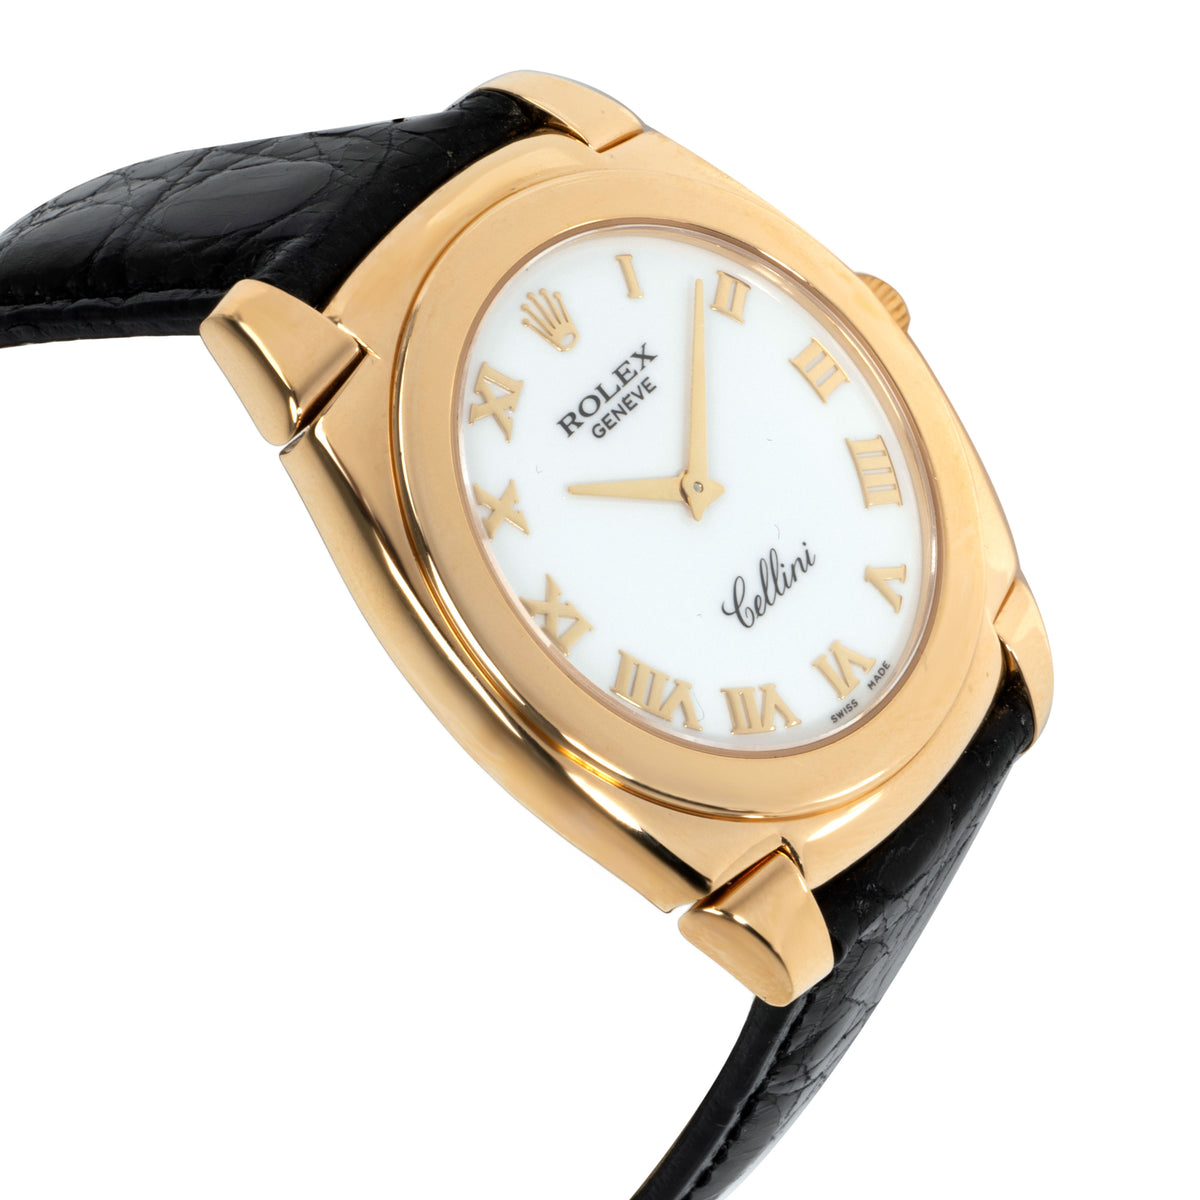 Rolex Cellini Cestello 5330 Men's Watch in 18kt Yellow Gold